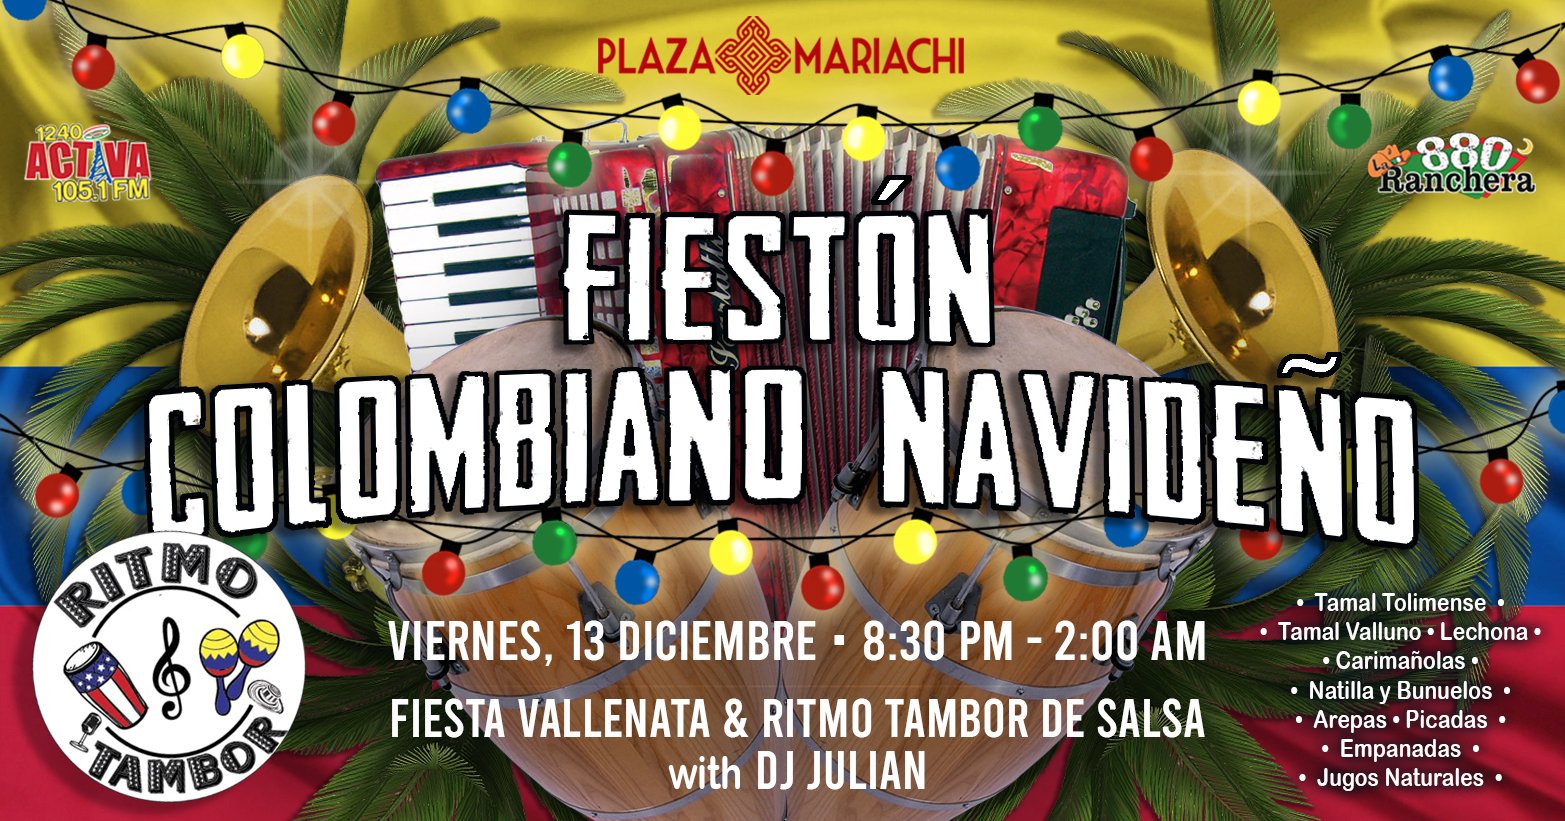 Fiestón Colombiano Navideño Plaza Mariachi Colombian Christmas Party